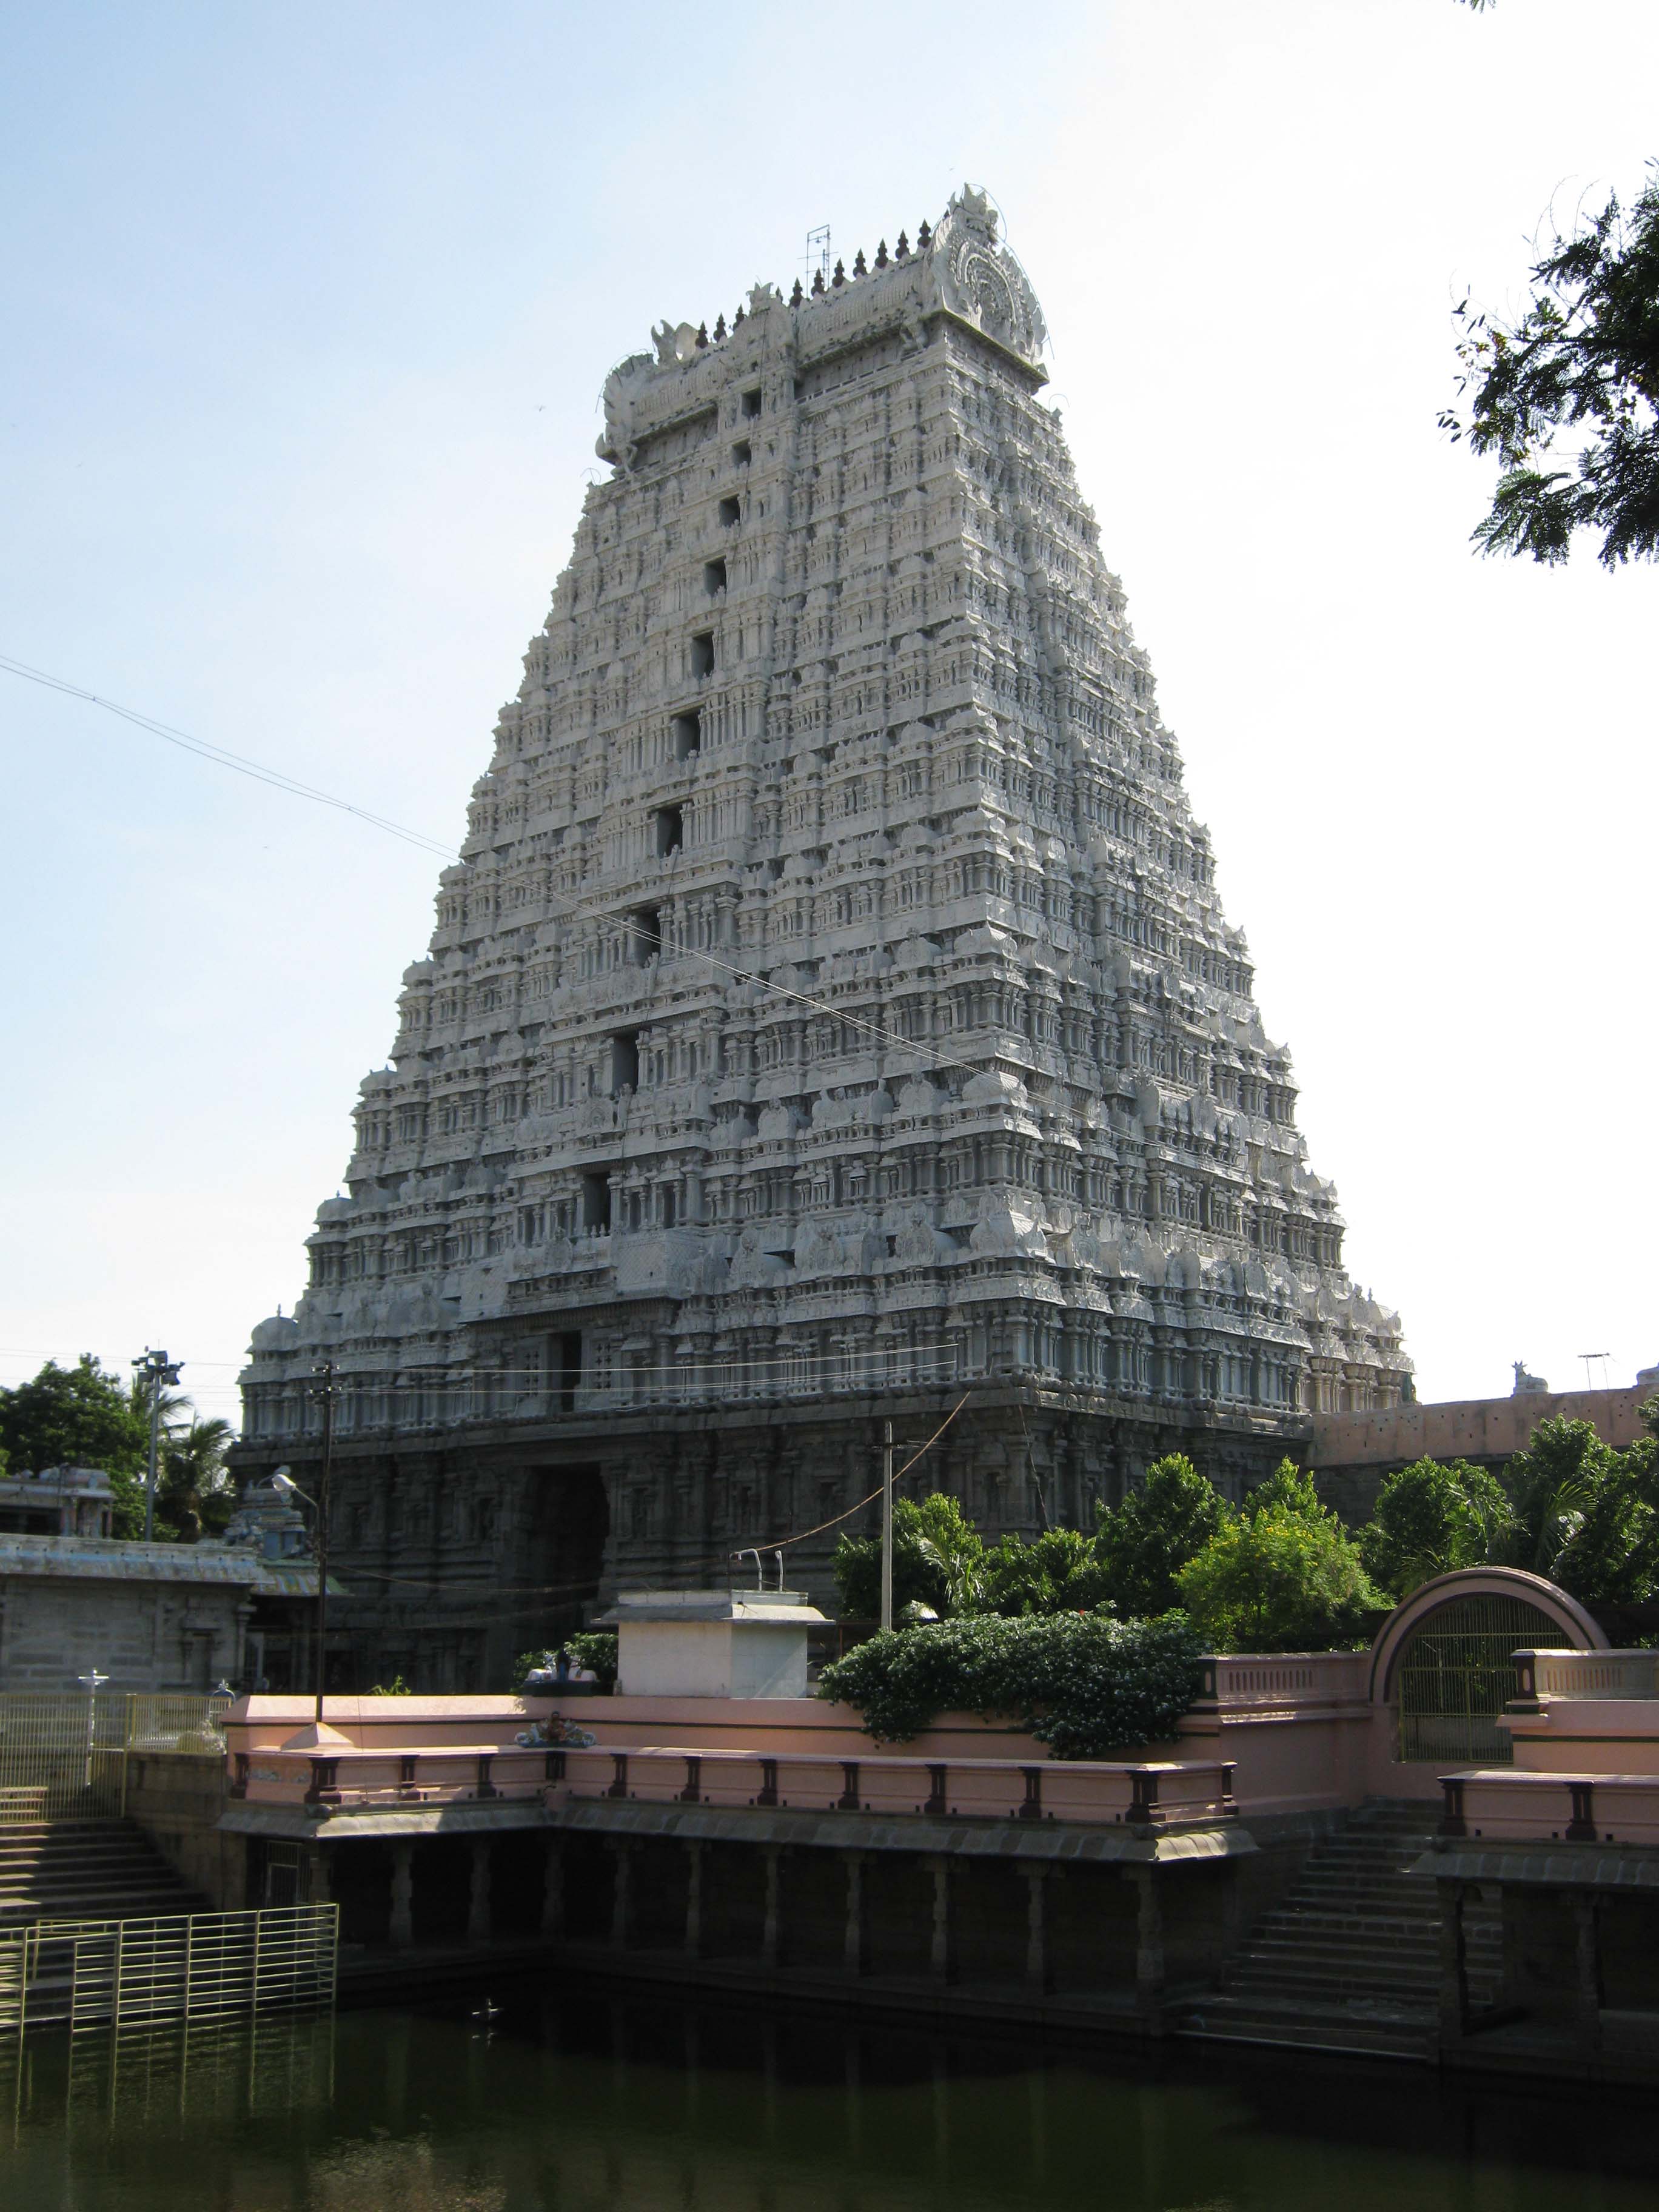 Arunachaleswarar Temple or Tiruvannamalai Temple